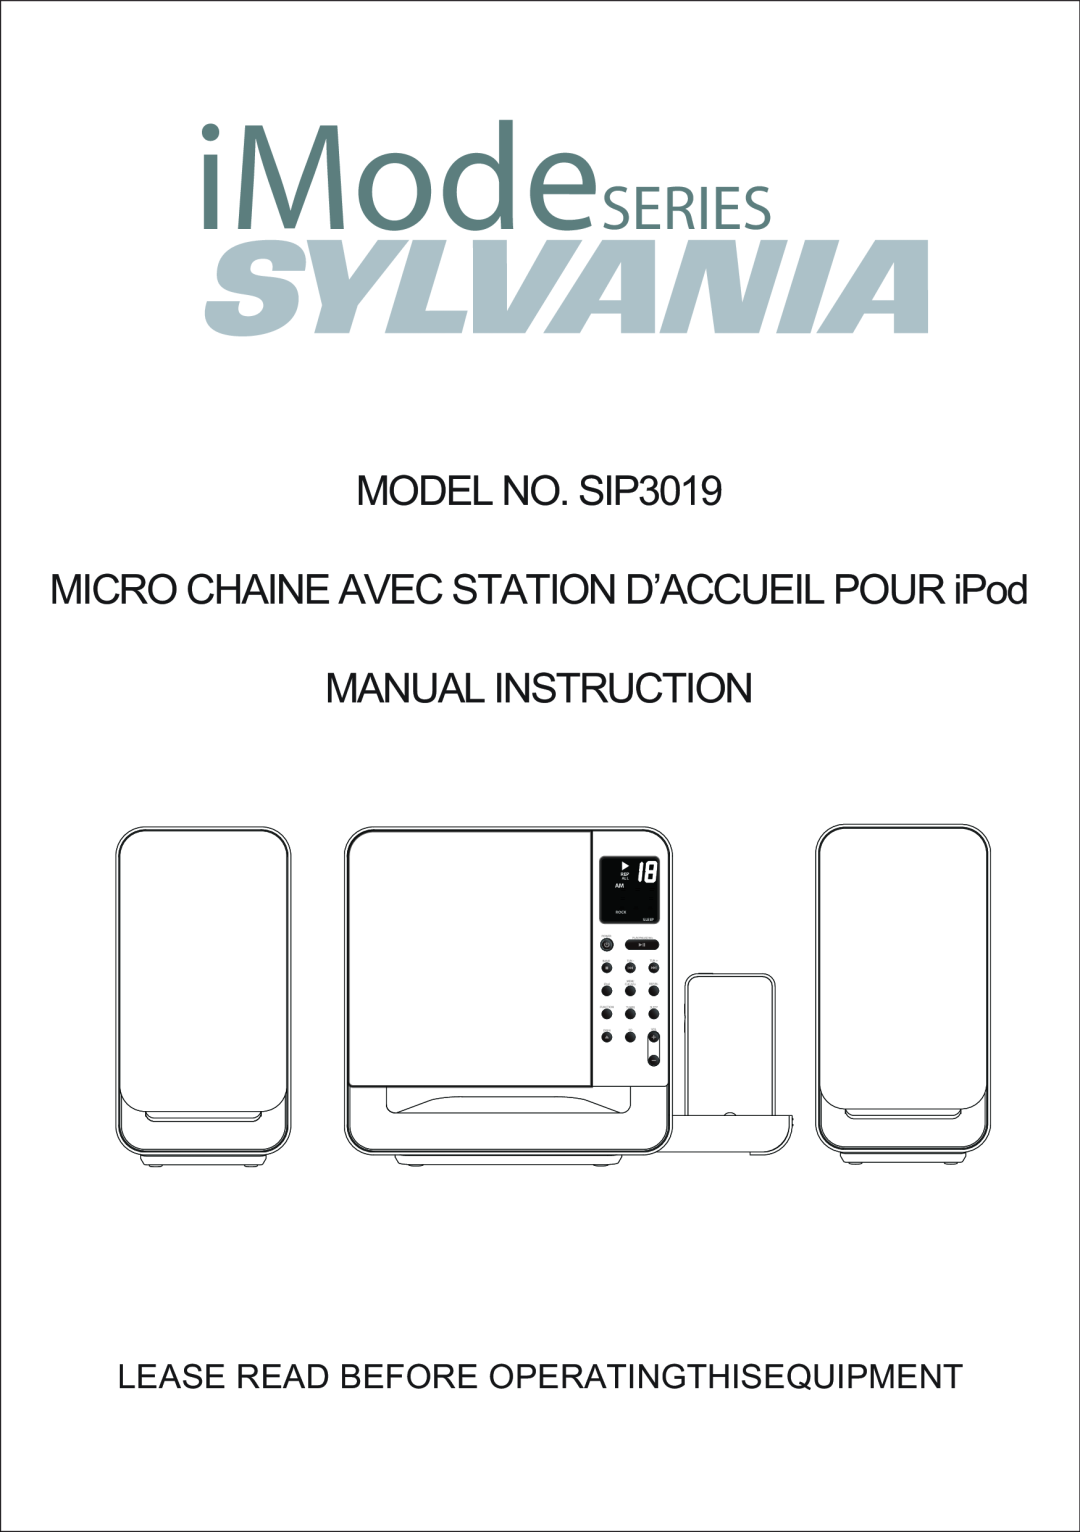 Sylvania instruction manual iModeSERIES, MODEL NO. SIP3019, CD MICRO SYSTEM DOCKING STATION FOR iPOD, Rock, Sleep 